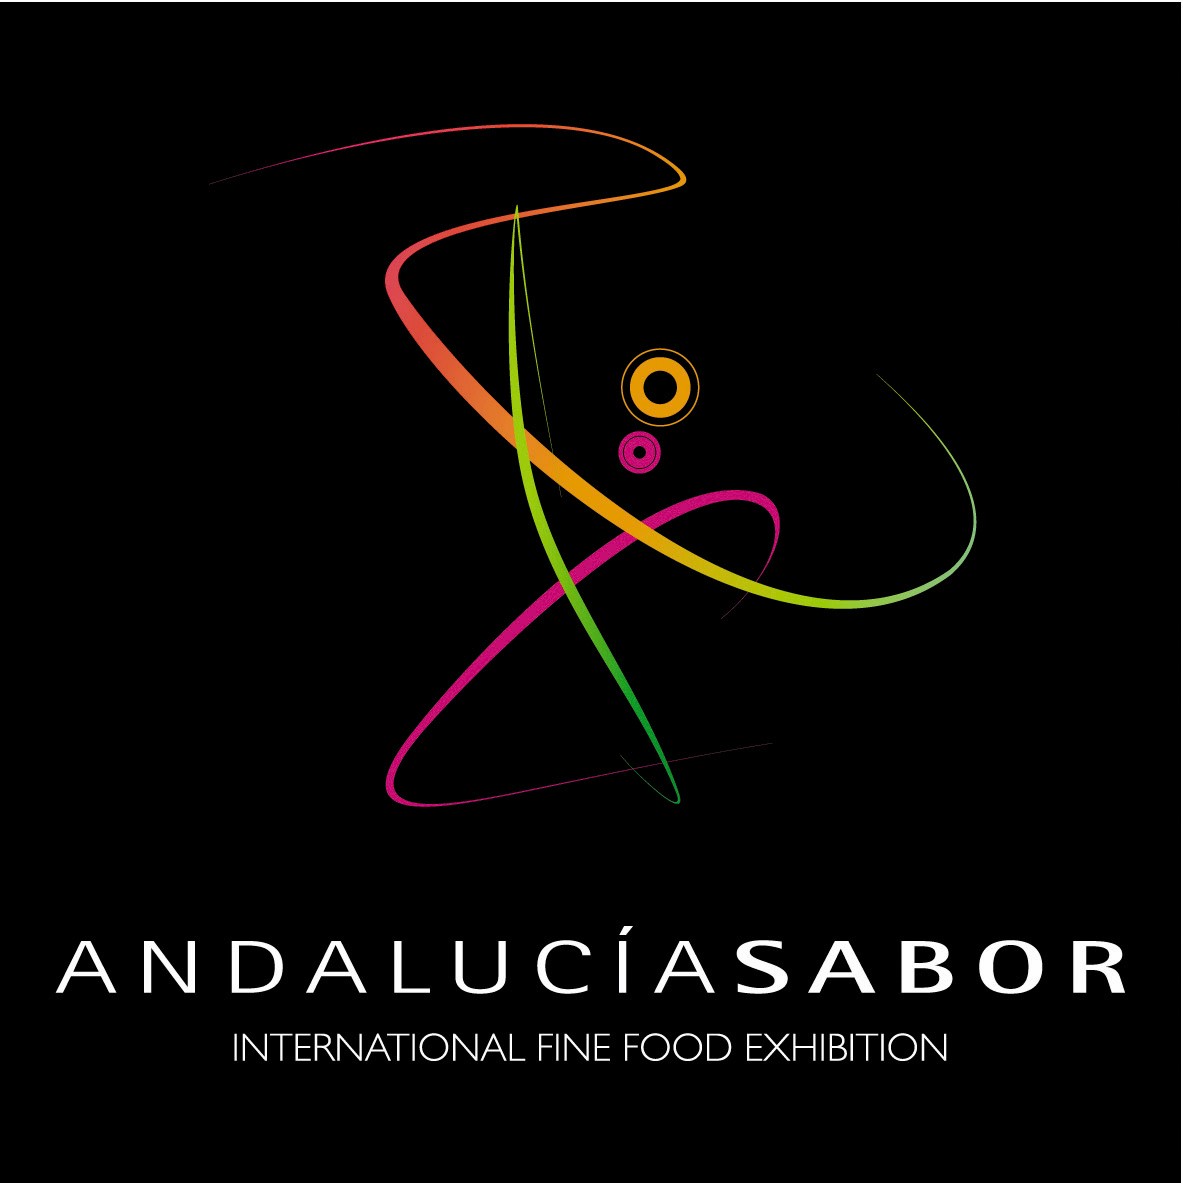 Andalucía sabor